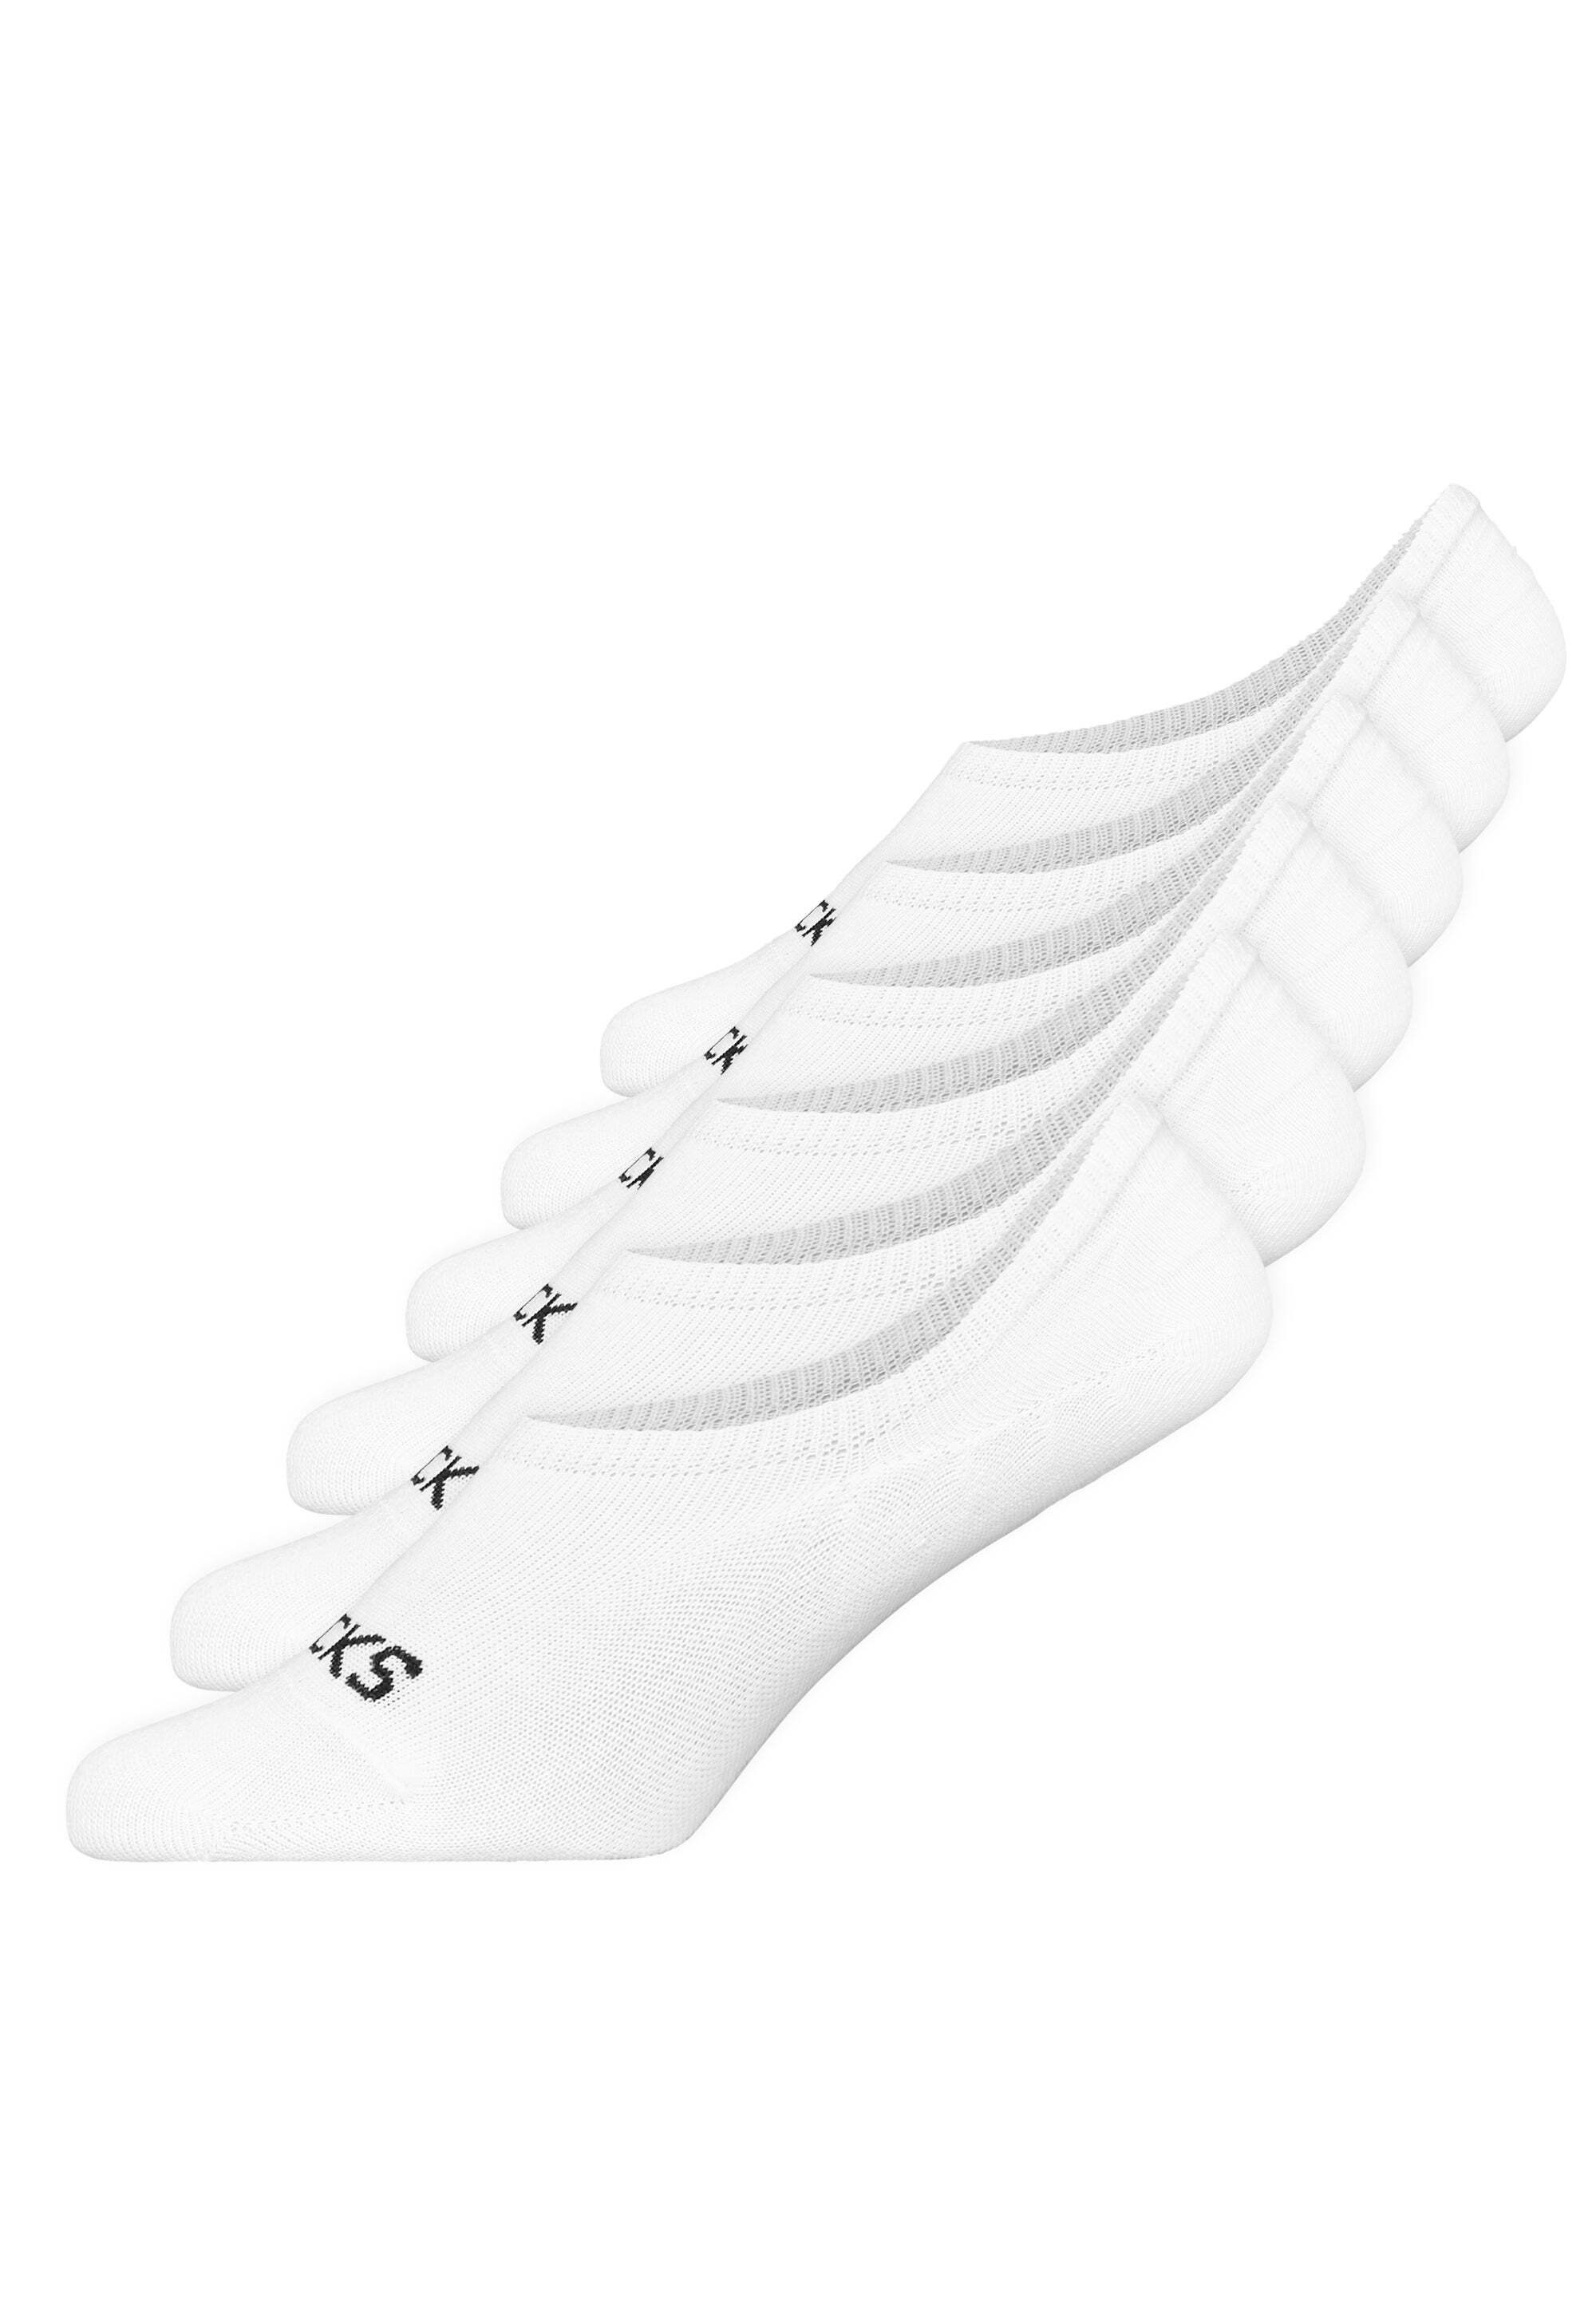 SNOCKS Füßlinge Sneakersocken (6-Paar) mit SNOCKS Logo auf den Zehen